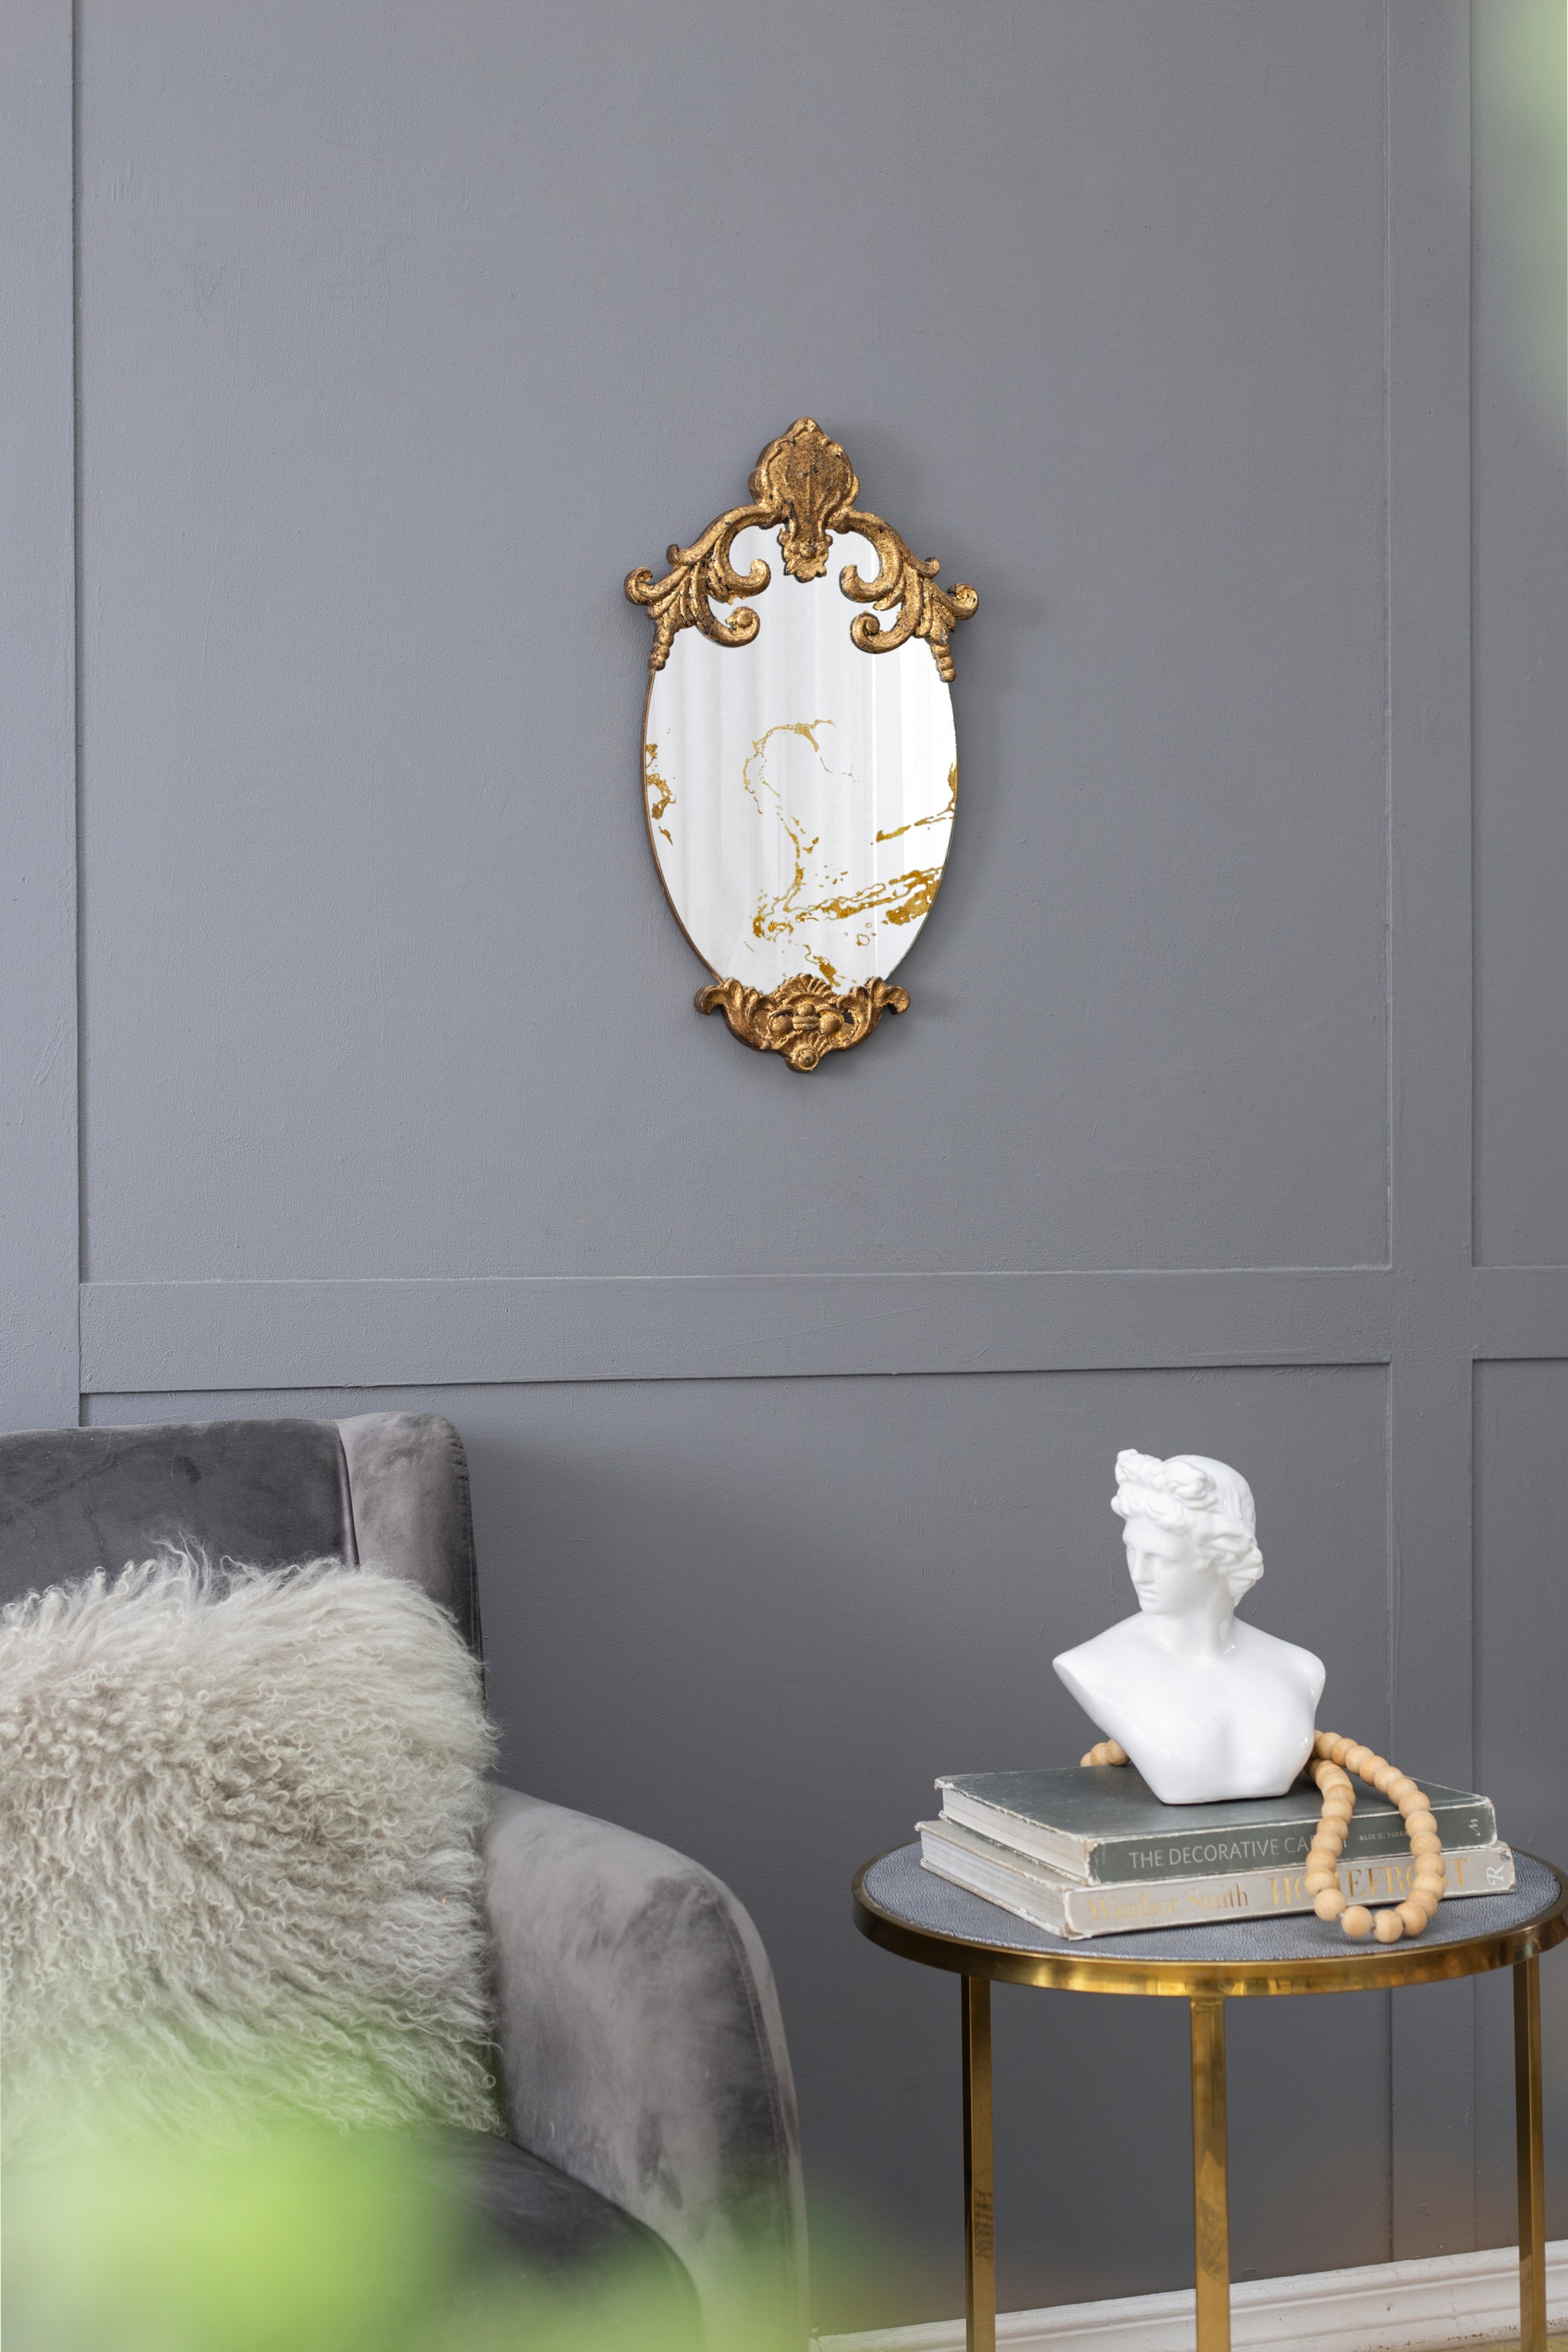 20" X 12" Decorative Oval Wall Mirror, Accent